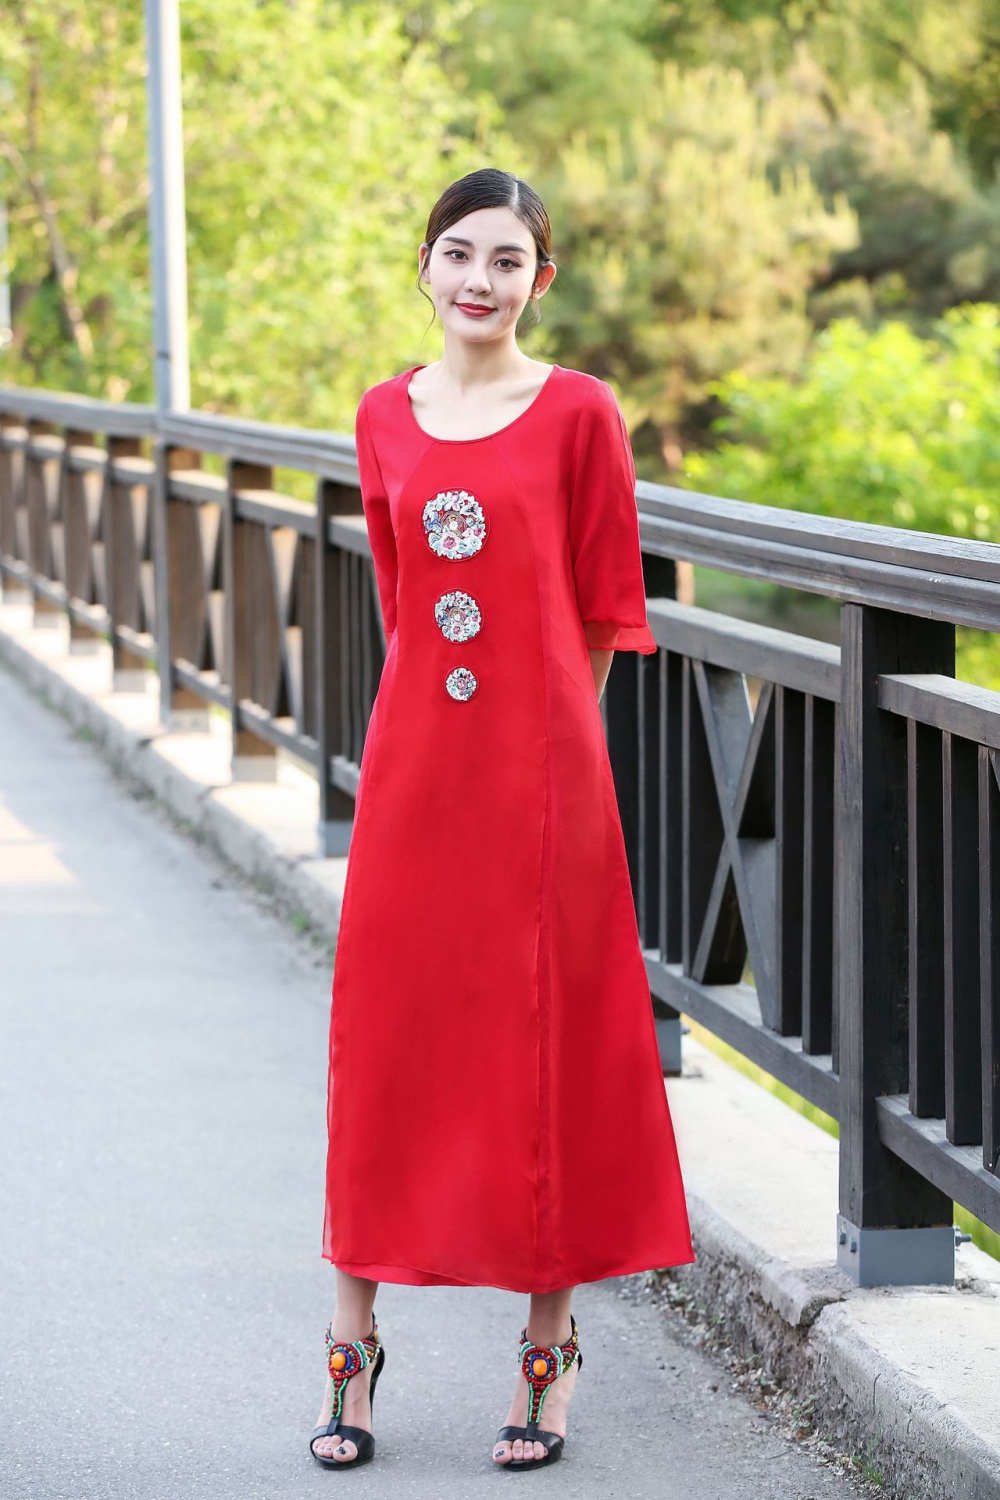 Short sleeve embroidered summer dress for women